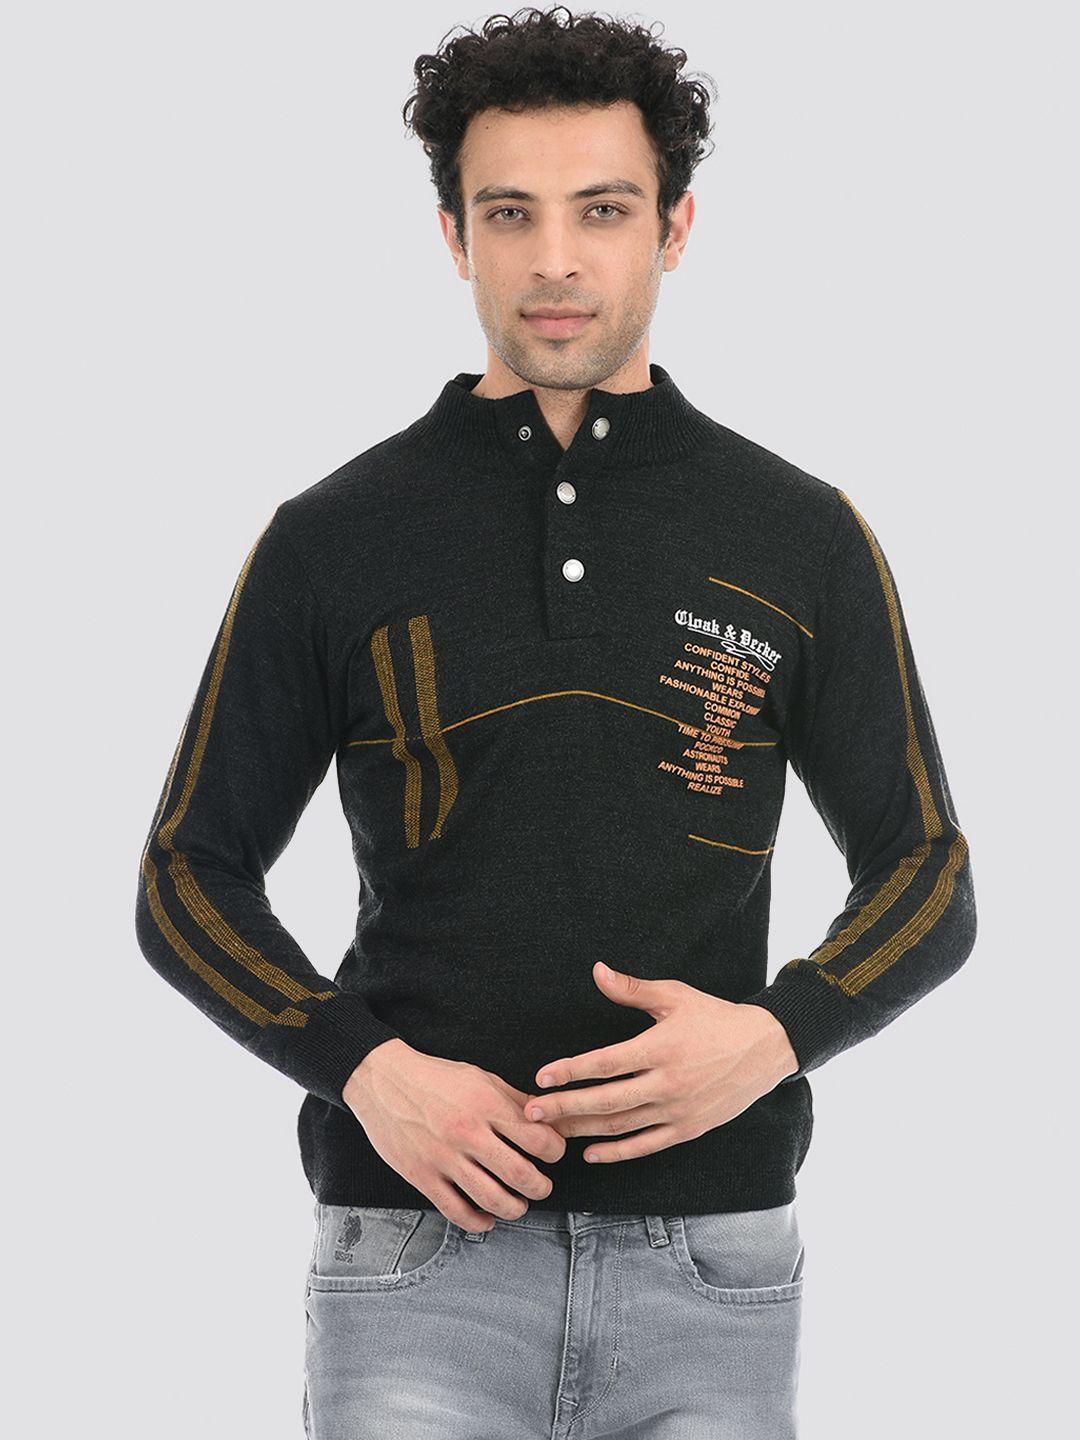 cloak & decker by monte carlo men black & brown striped acrylic pullover sweater